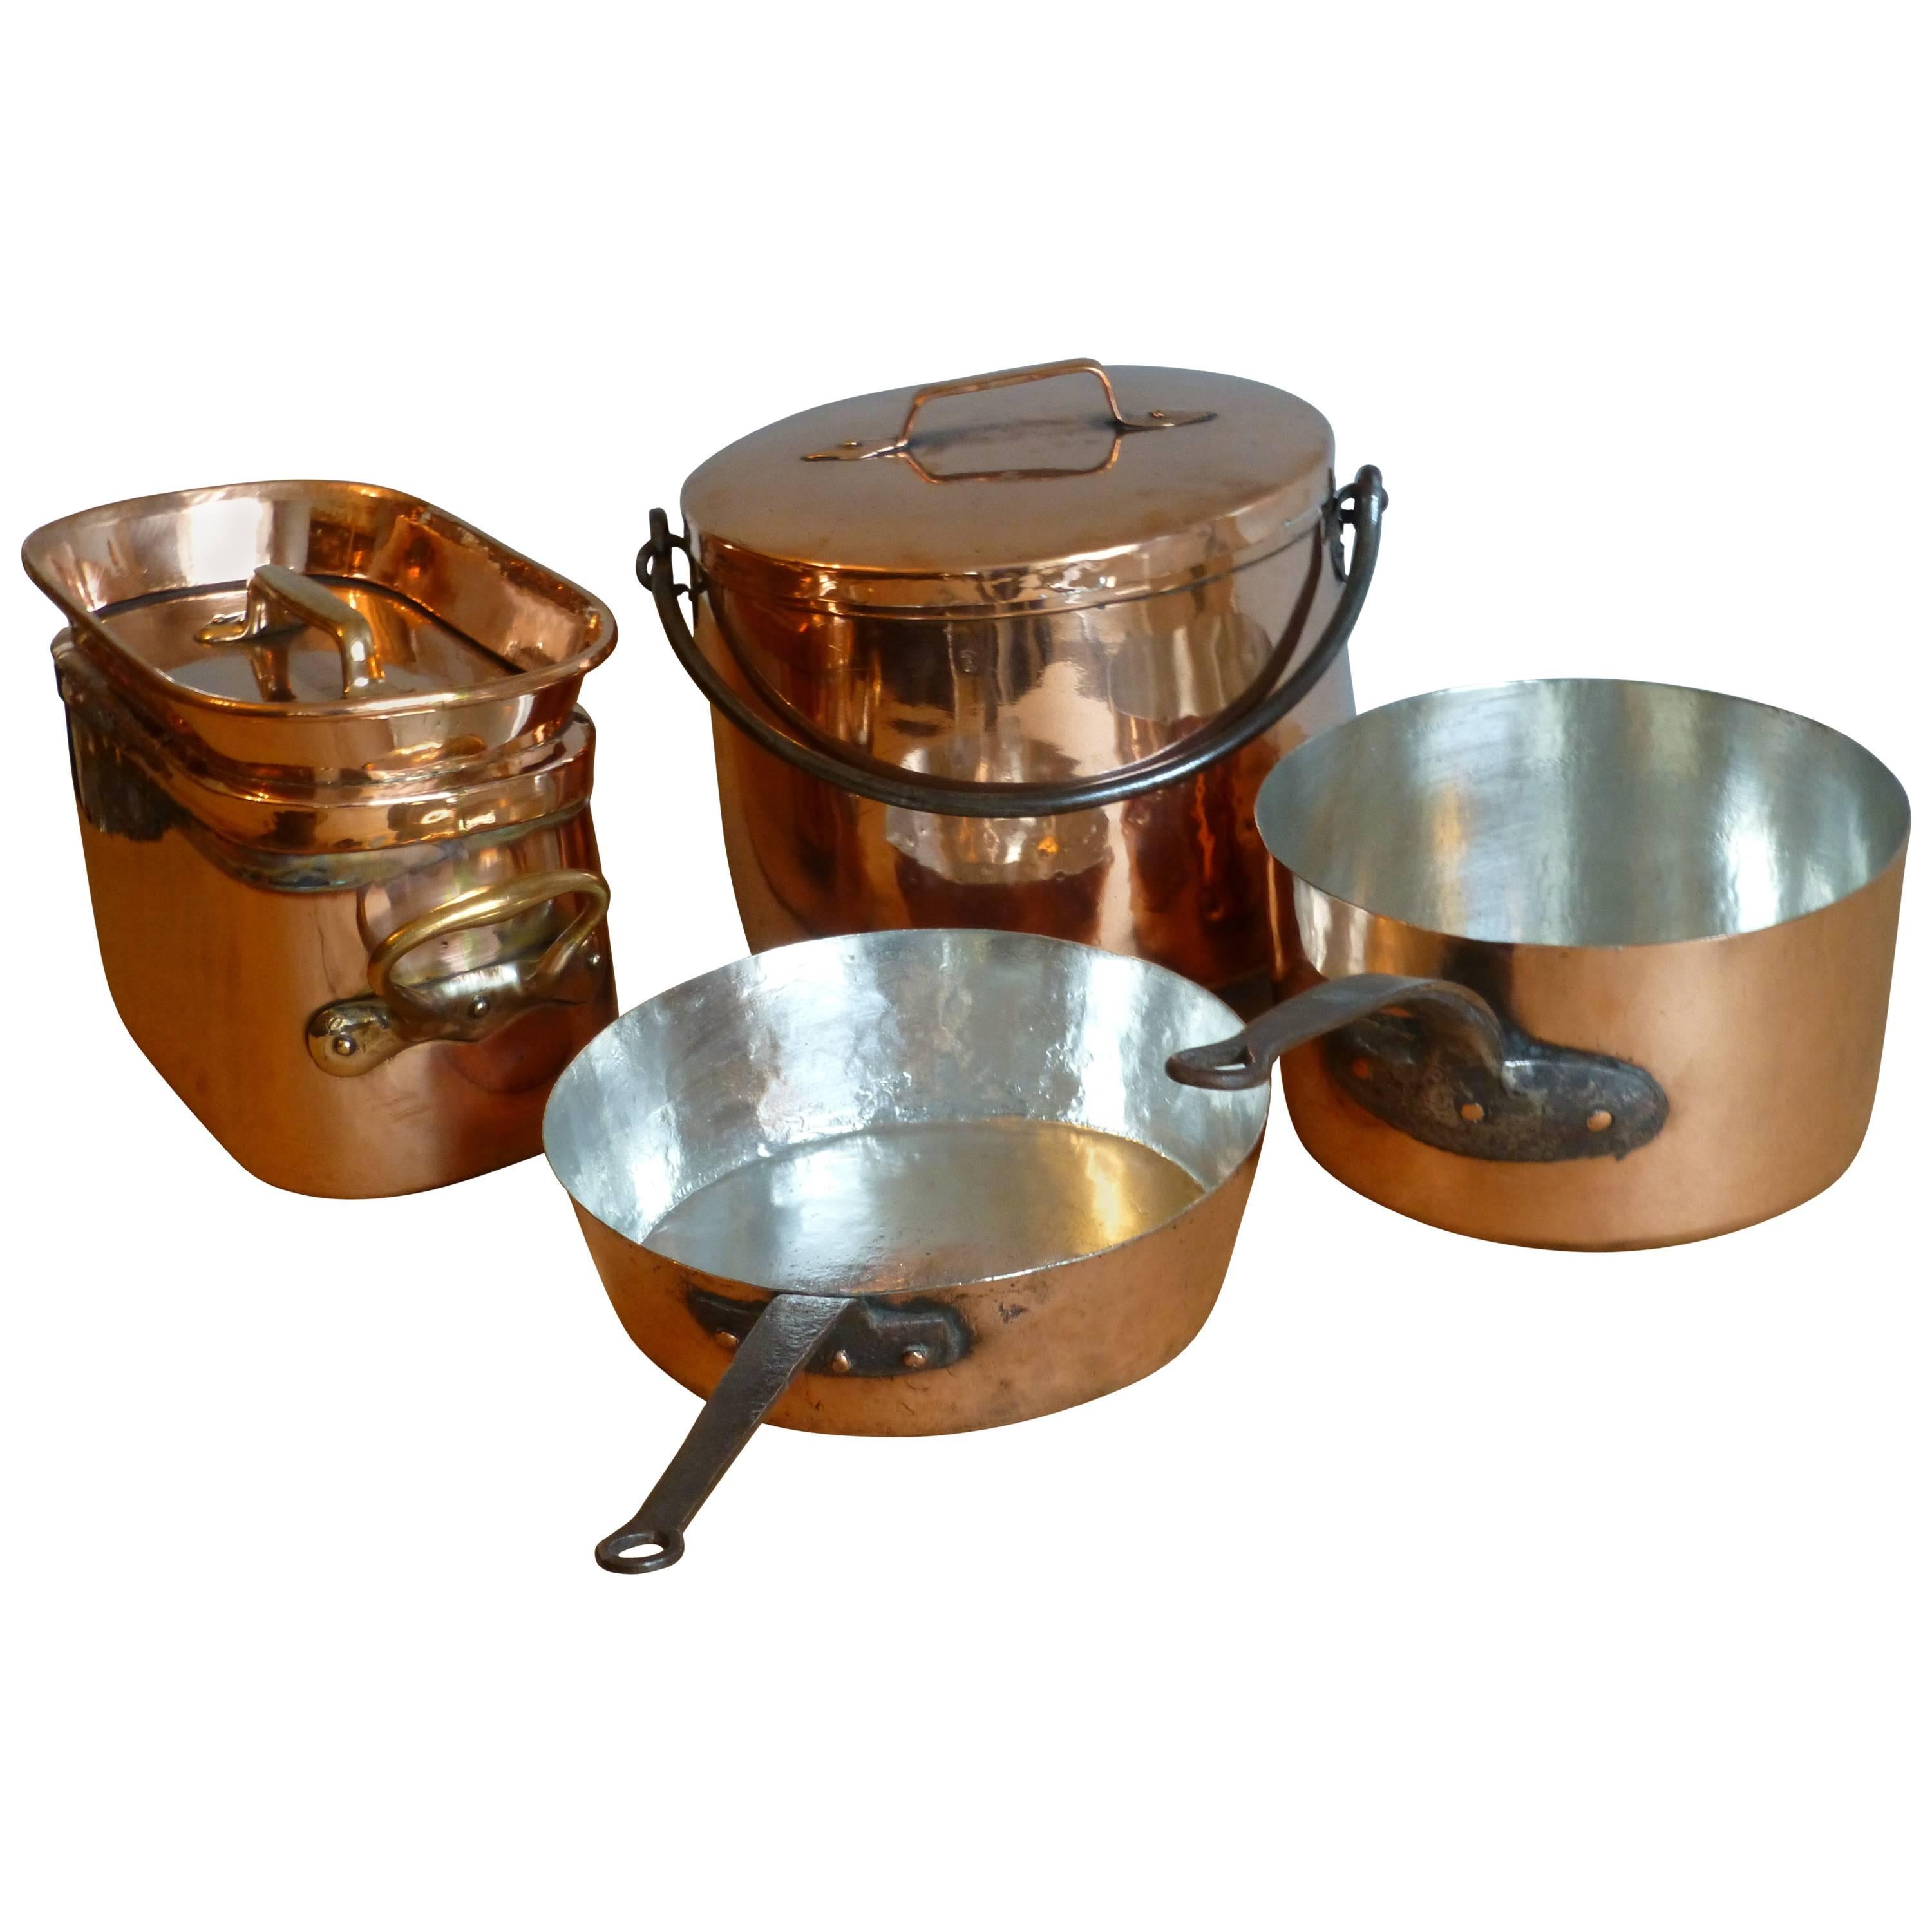 Magnificent Set of Re-Tinned Copper Pans, Pots